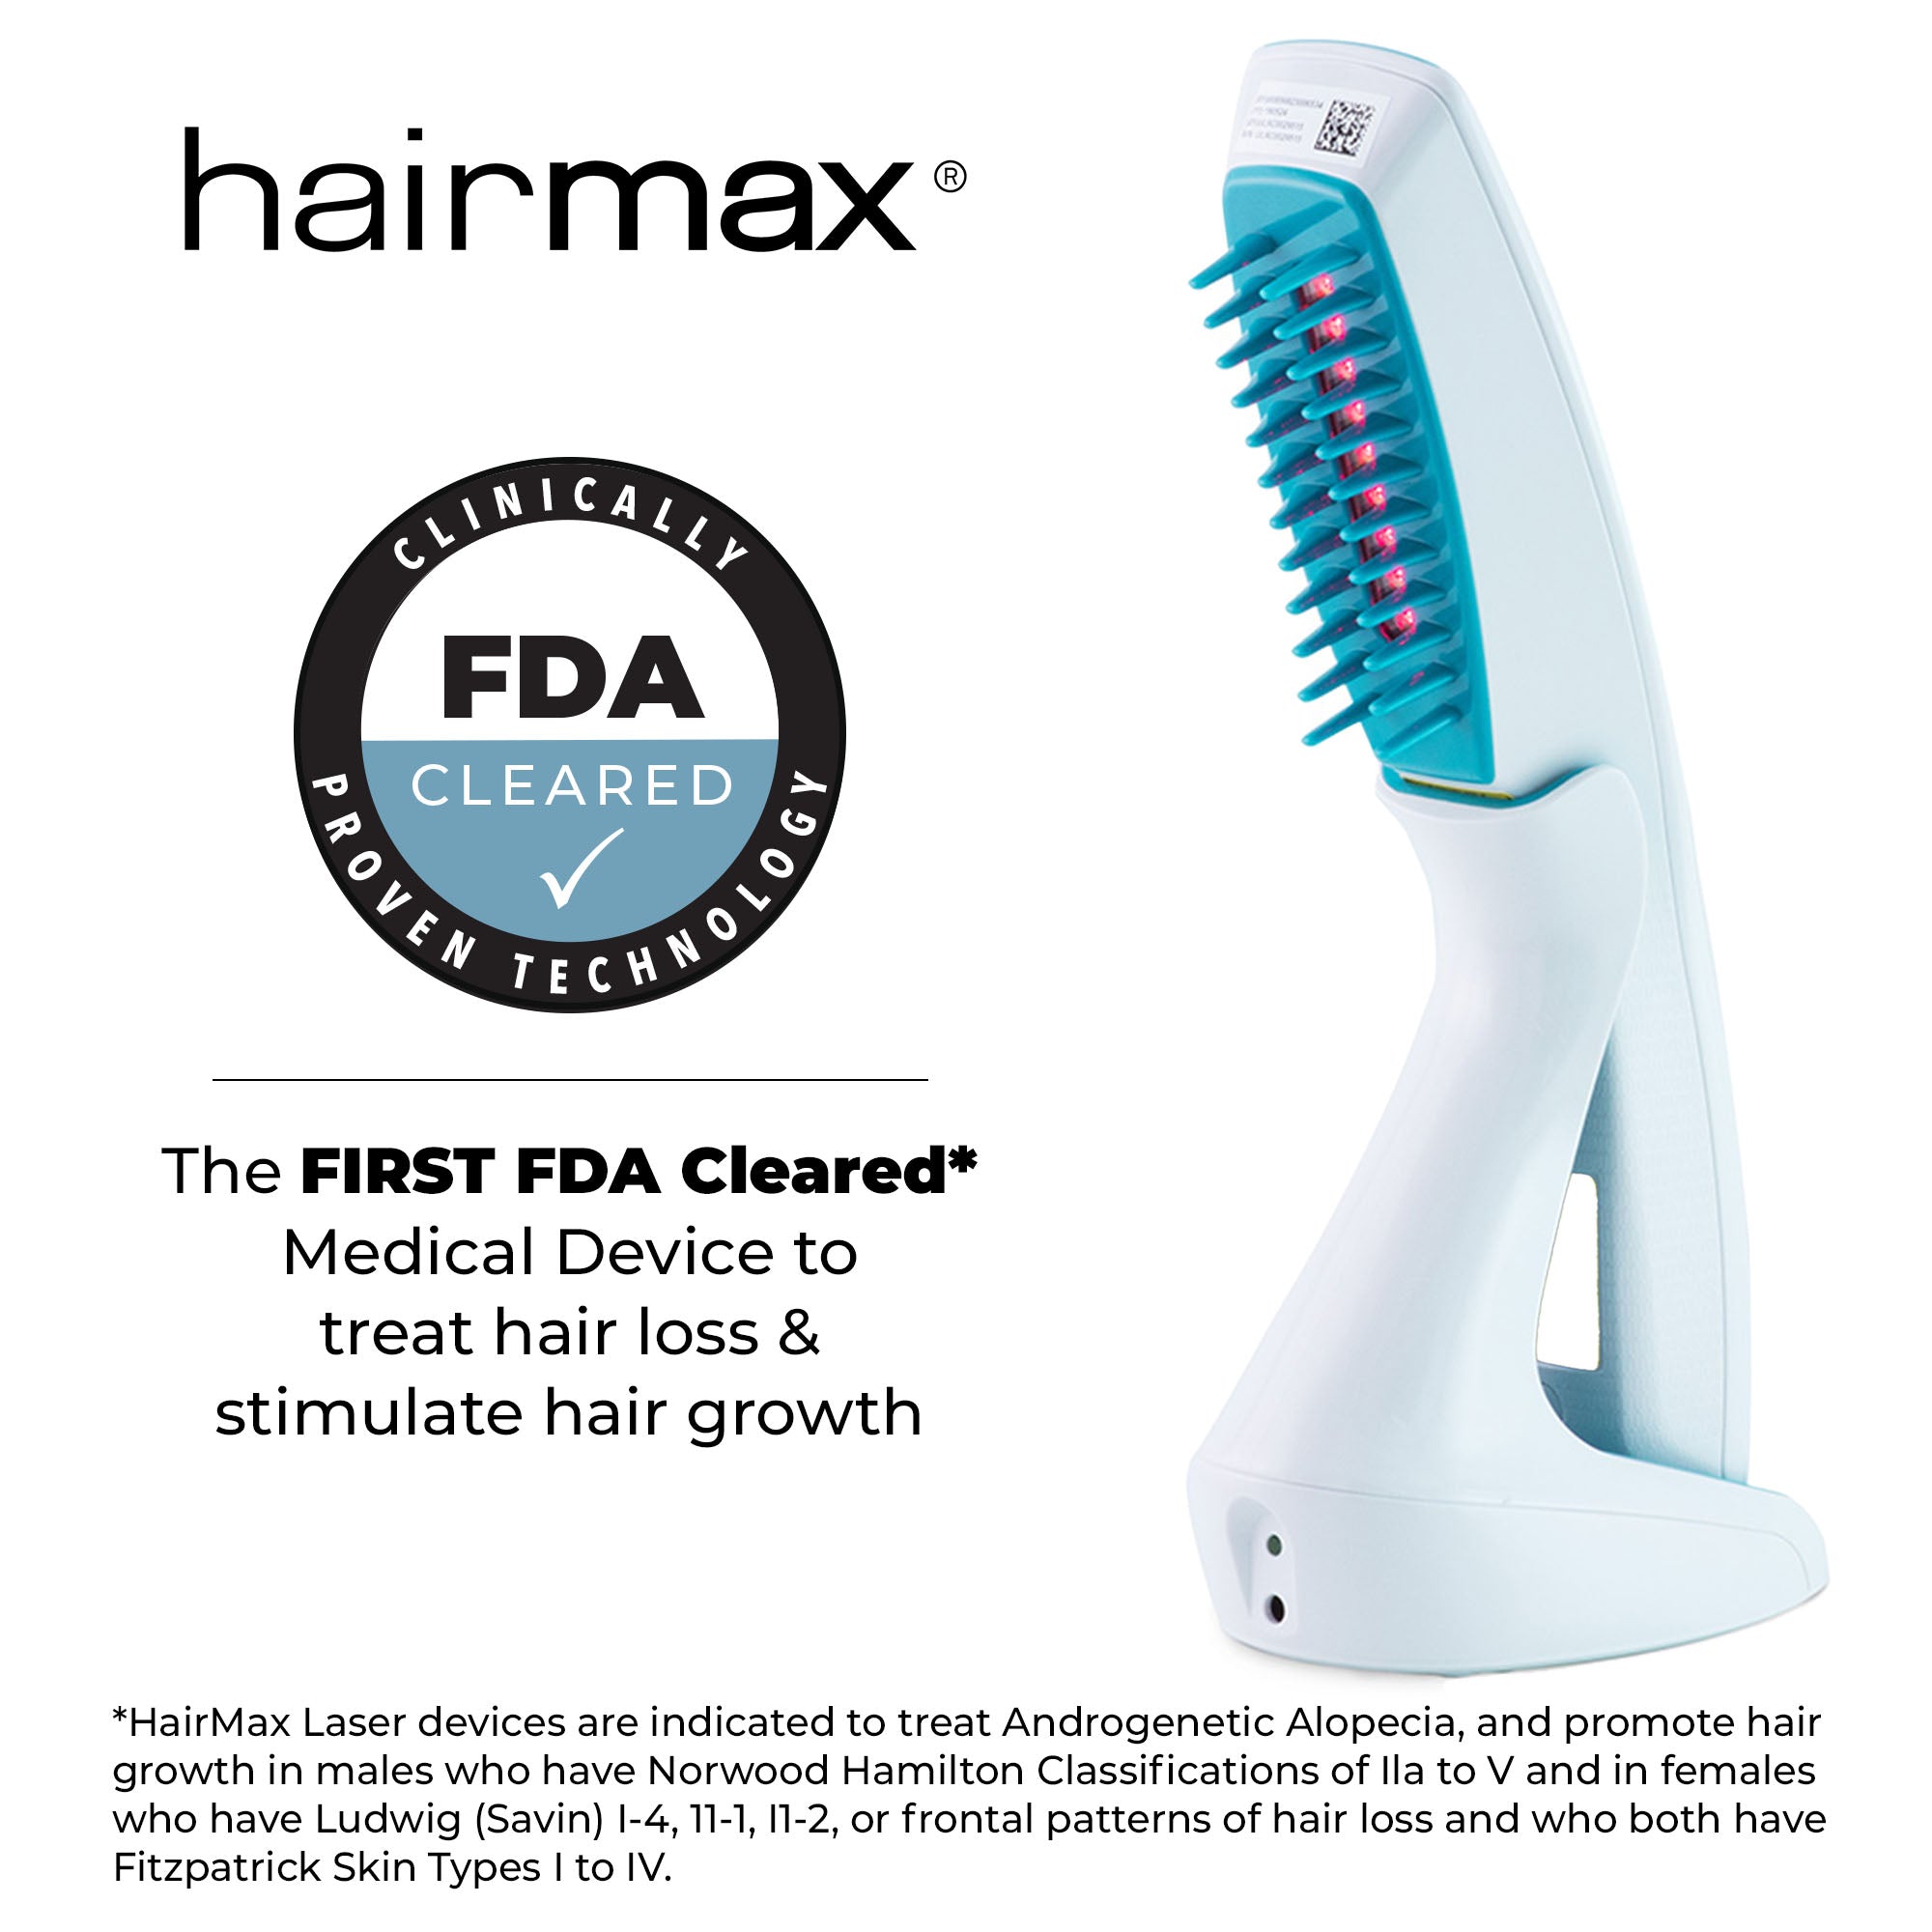 Hairmax Ultima 9 Classic LaserComb Hair Growth Device / 9 Classic